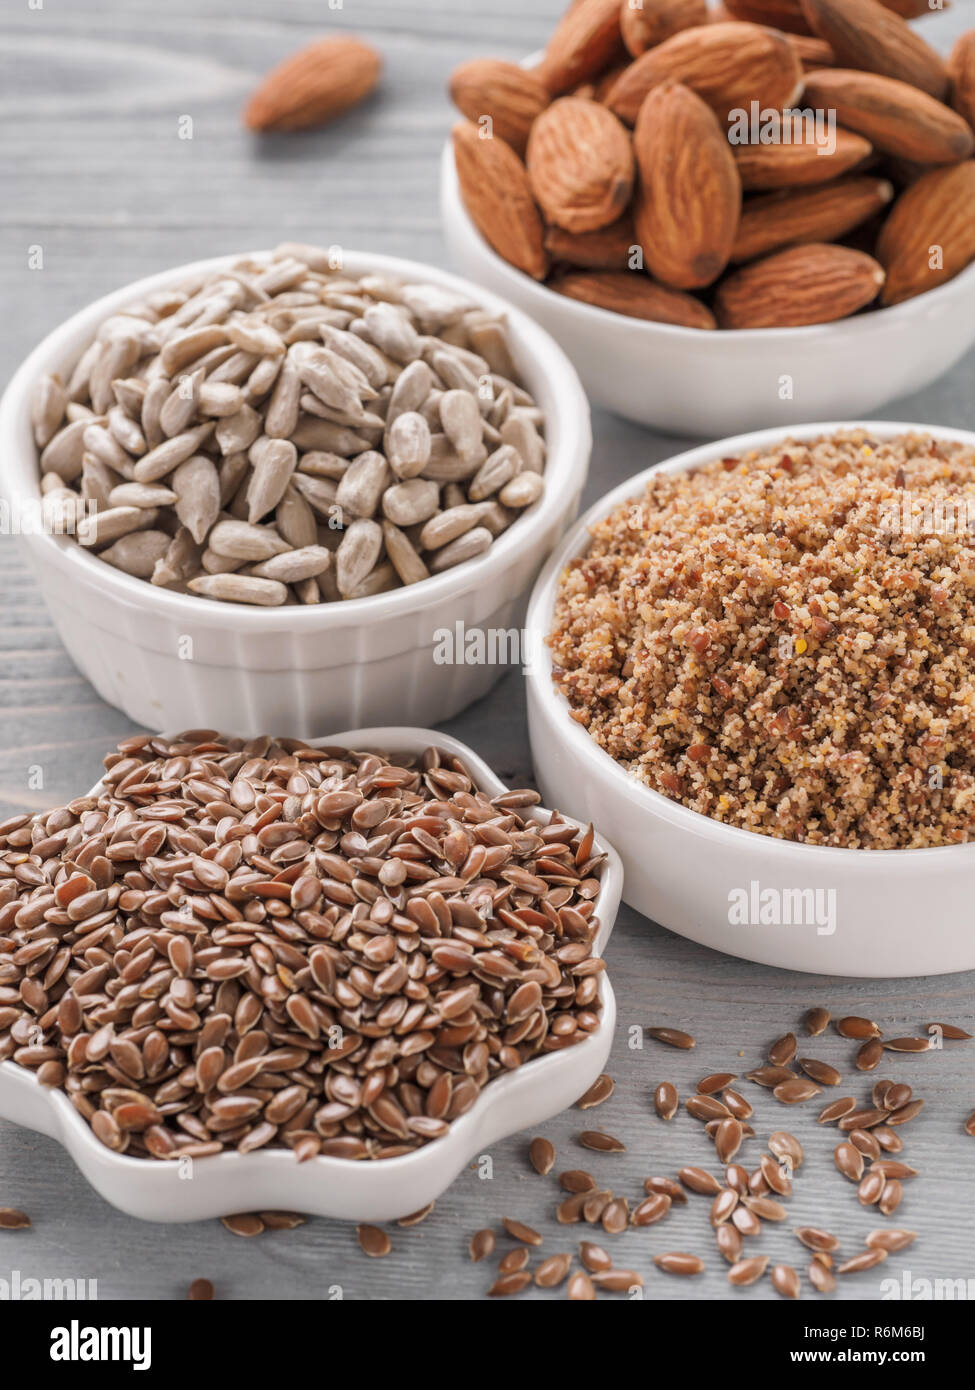 LSA mix, Linseed, Sunflower seeds, Almonds Stock Photo